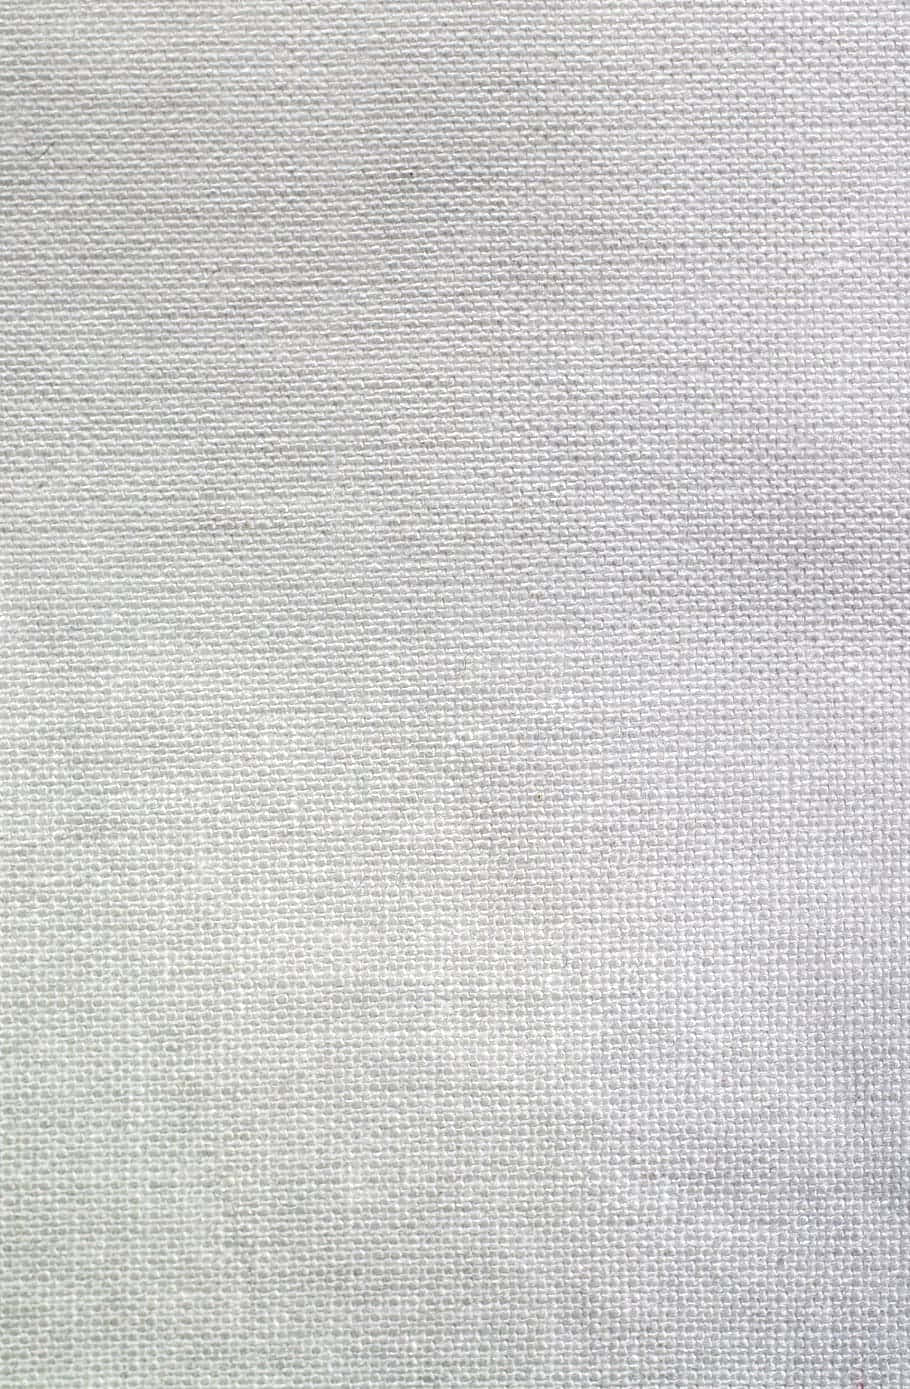 Natural Woven Fabric Texture Wallpaper